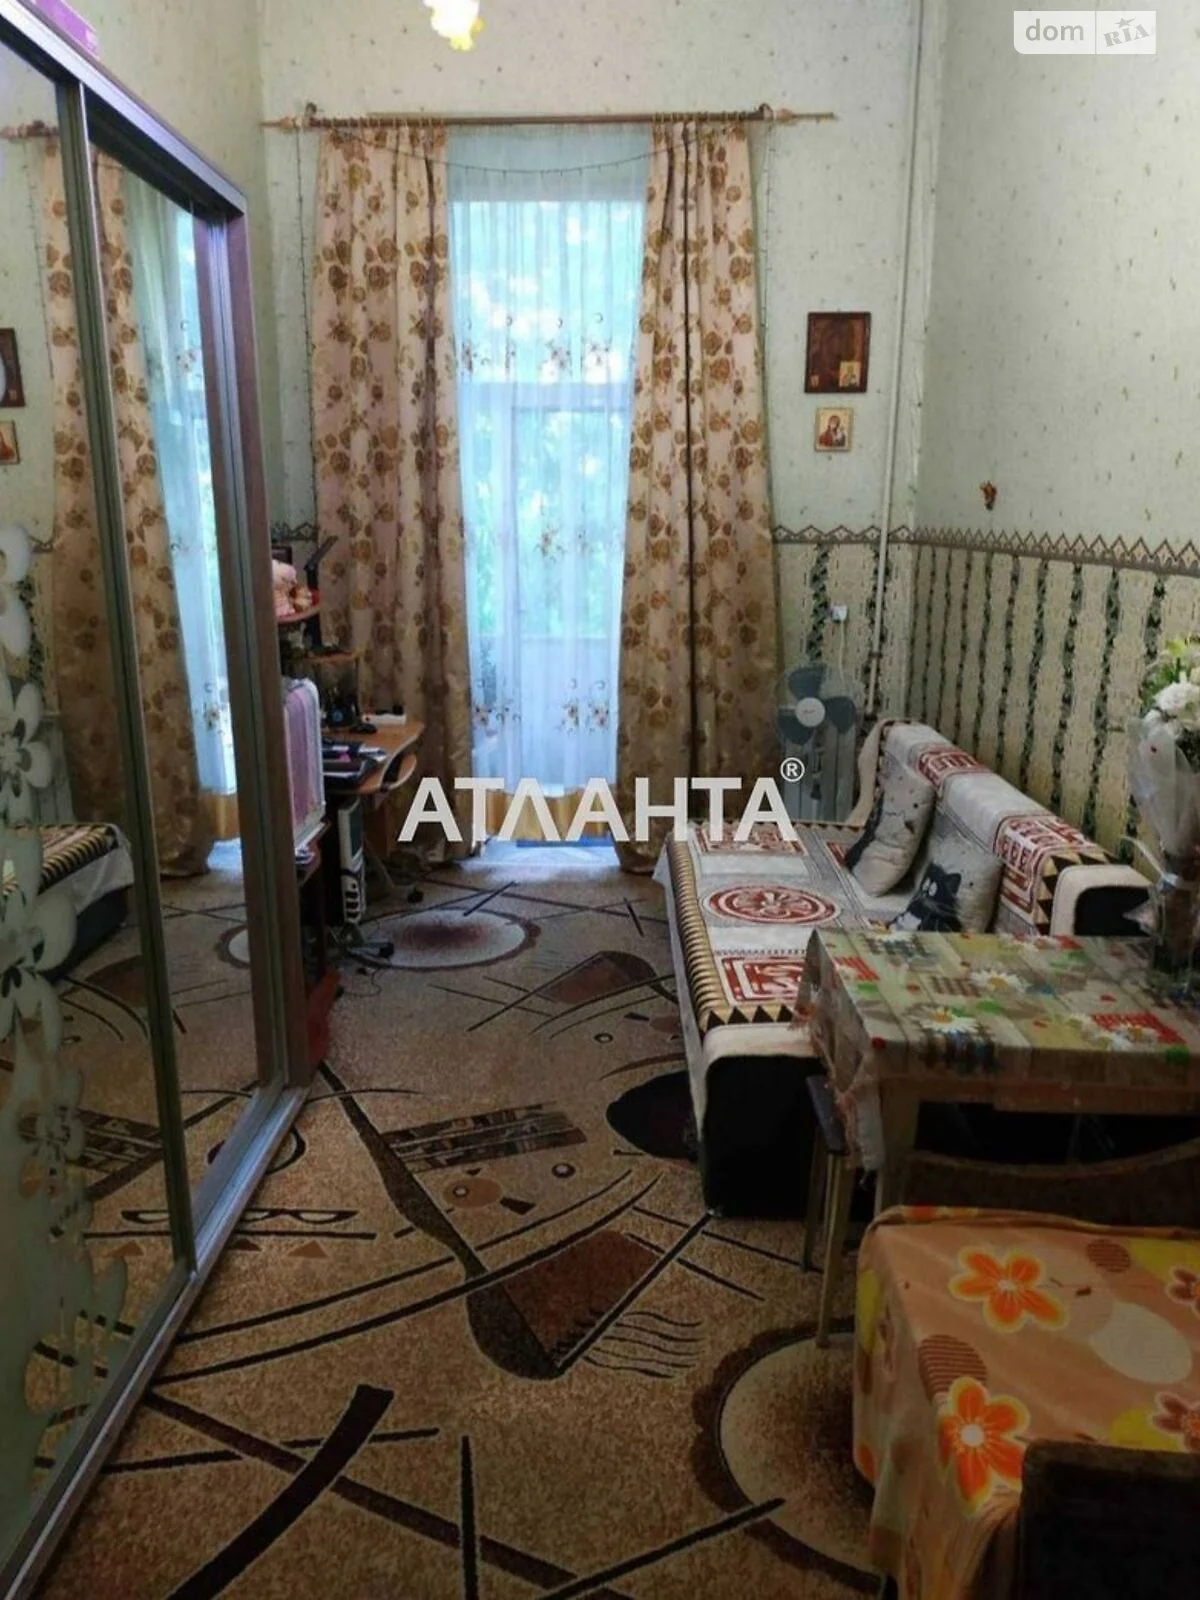 Продается комната 27 кв. м в Одессе, цена: 19000 $ - фото 1